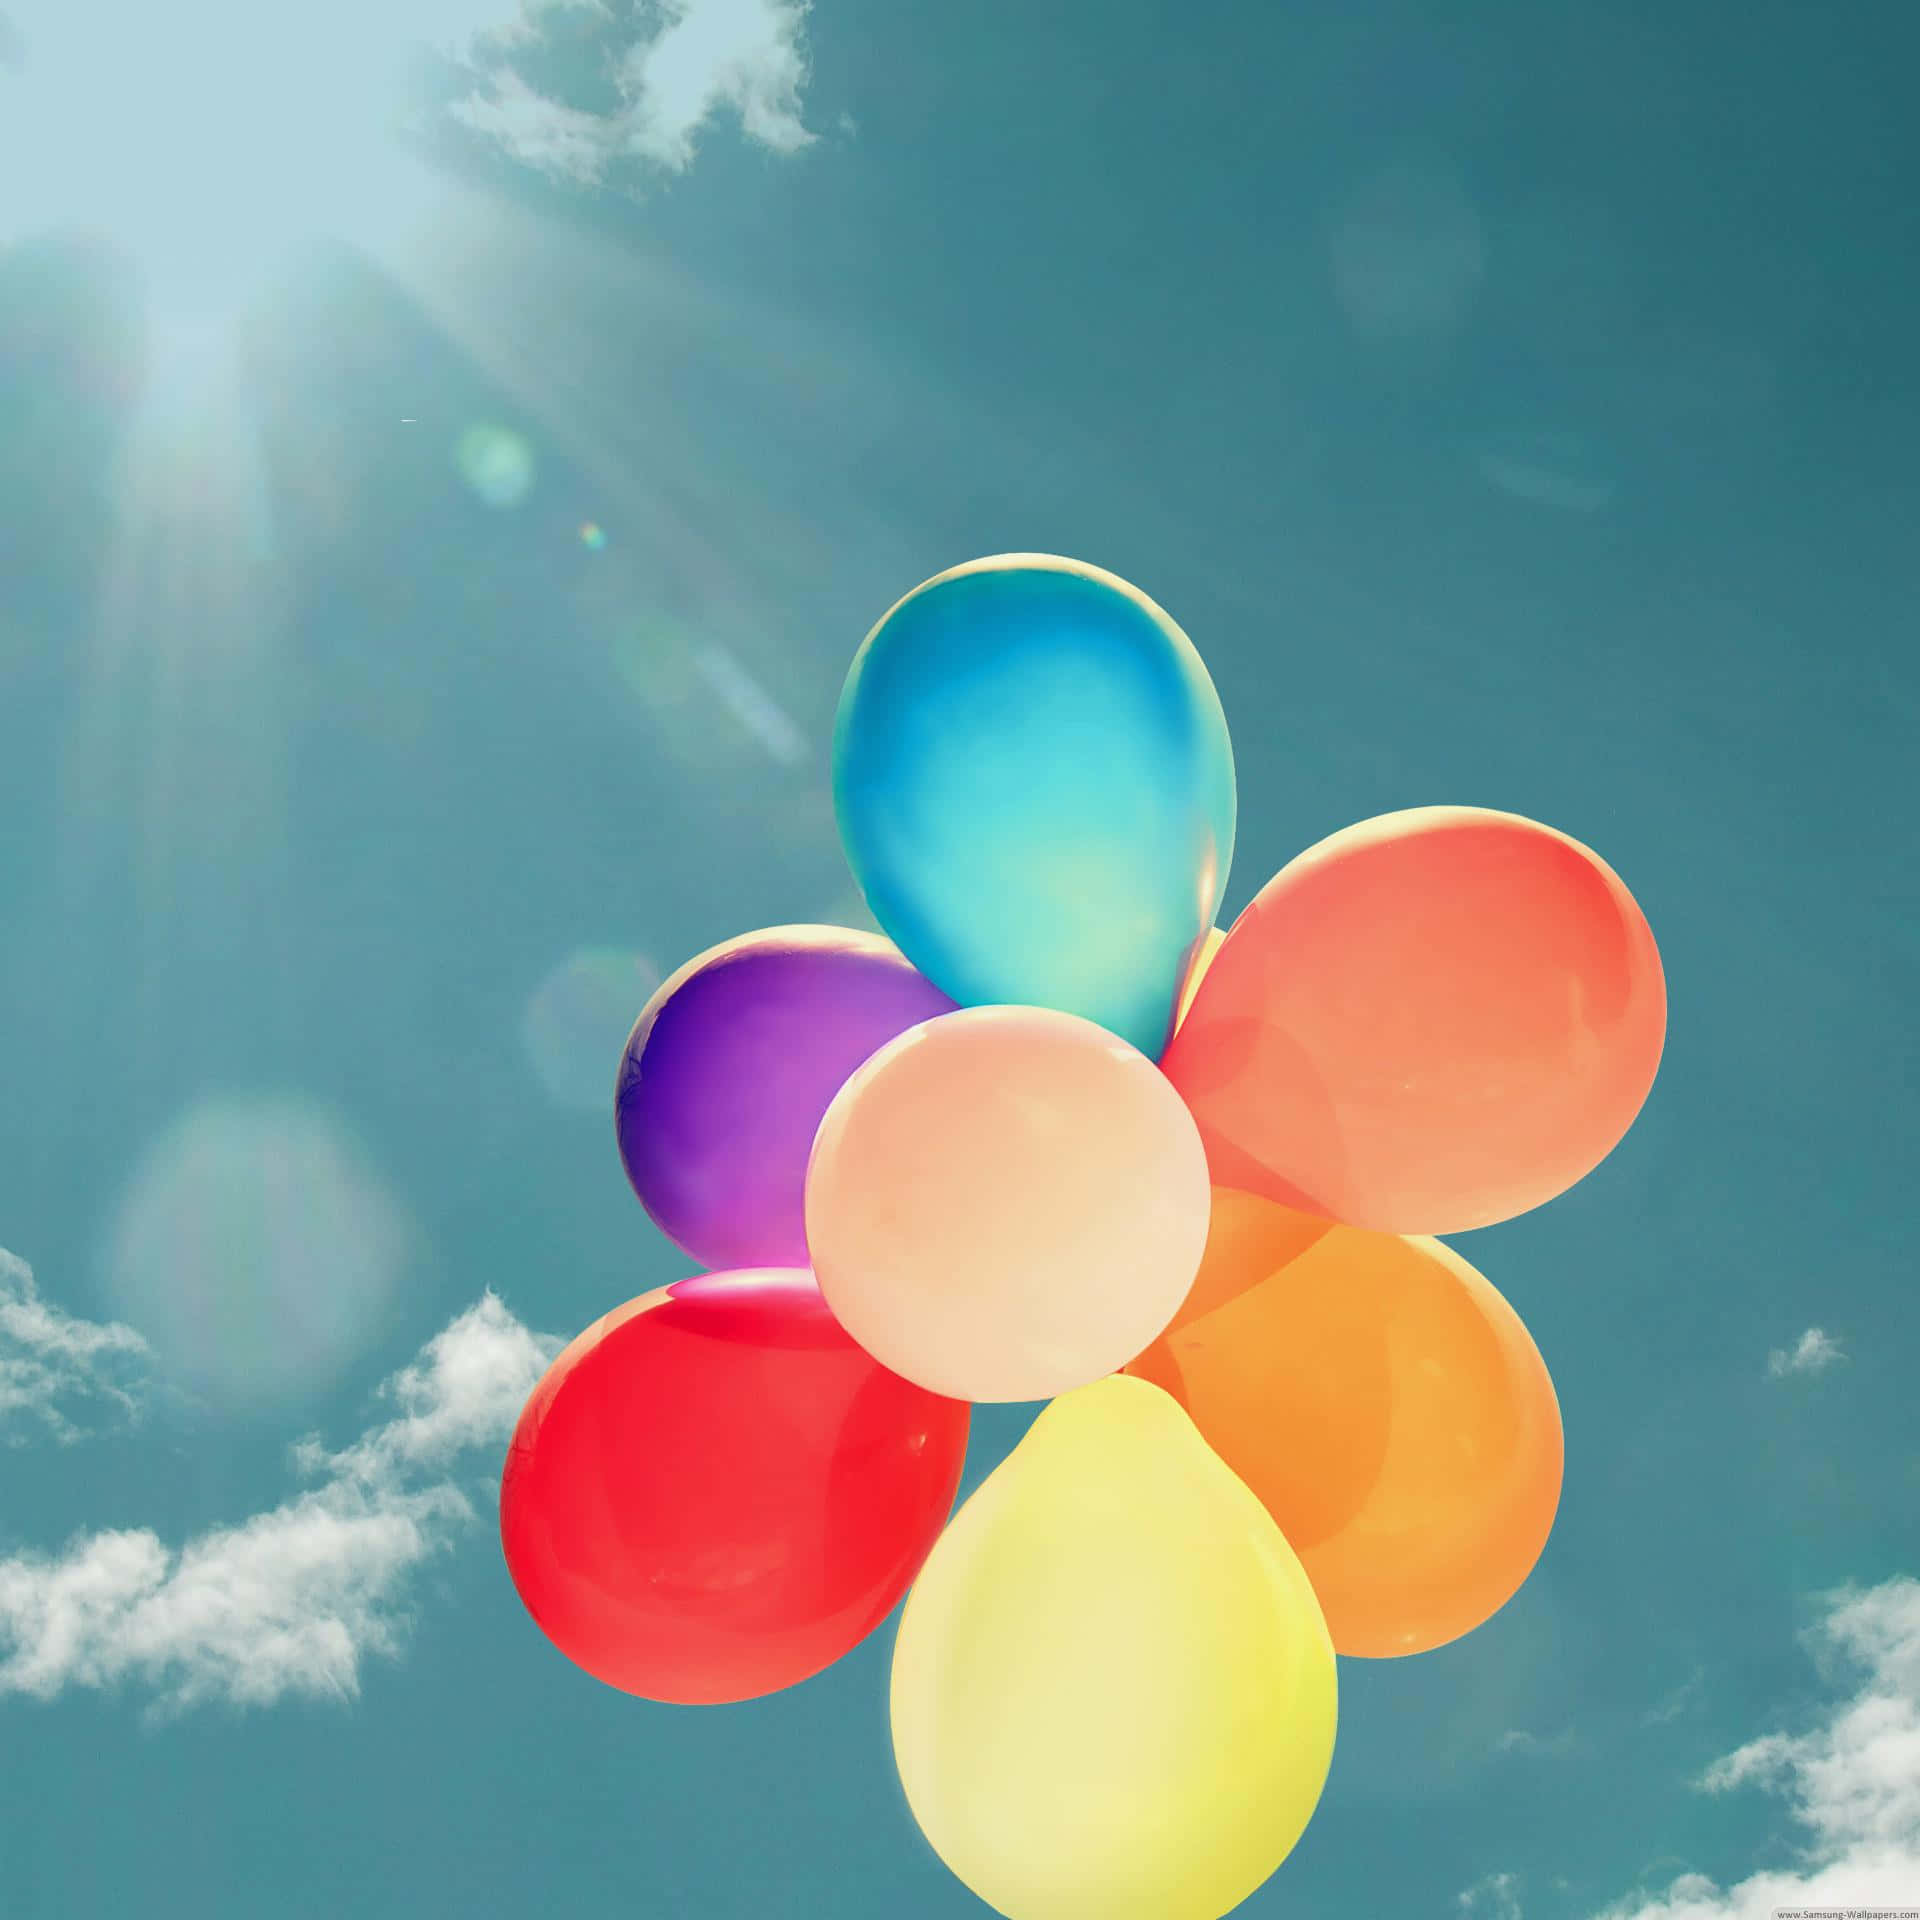 Färggladaballonger Fyller Sommarhimlen!